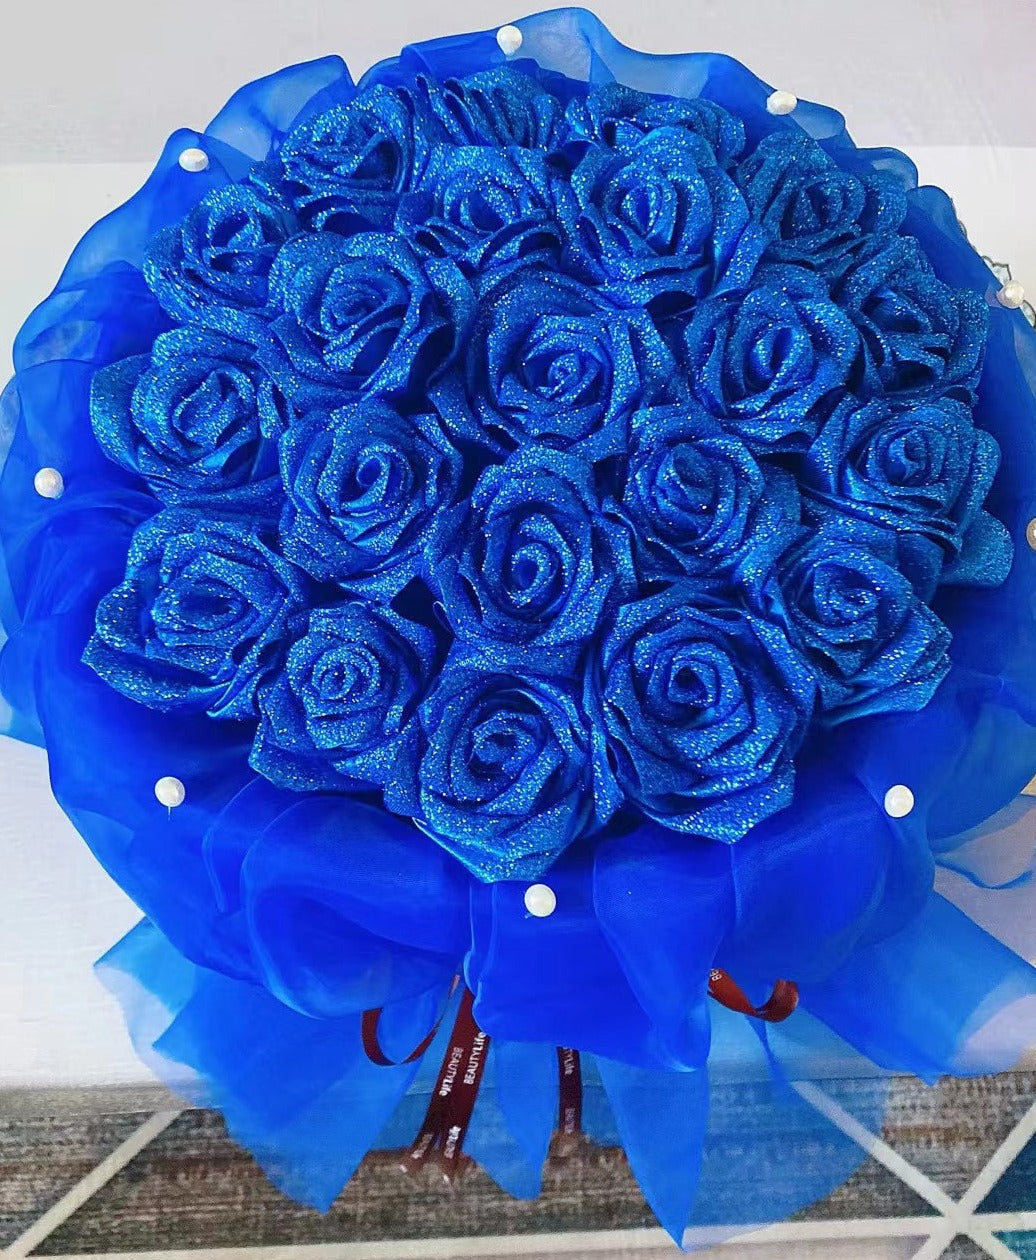 Handmade diy custom ribbon rose flower 33pcs finish products for birthday girlfriend gift